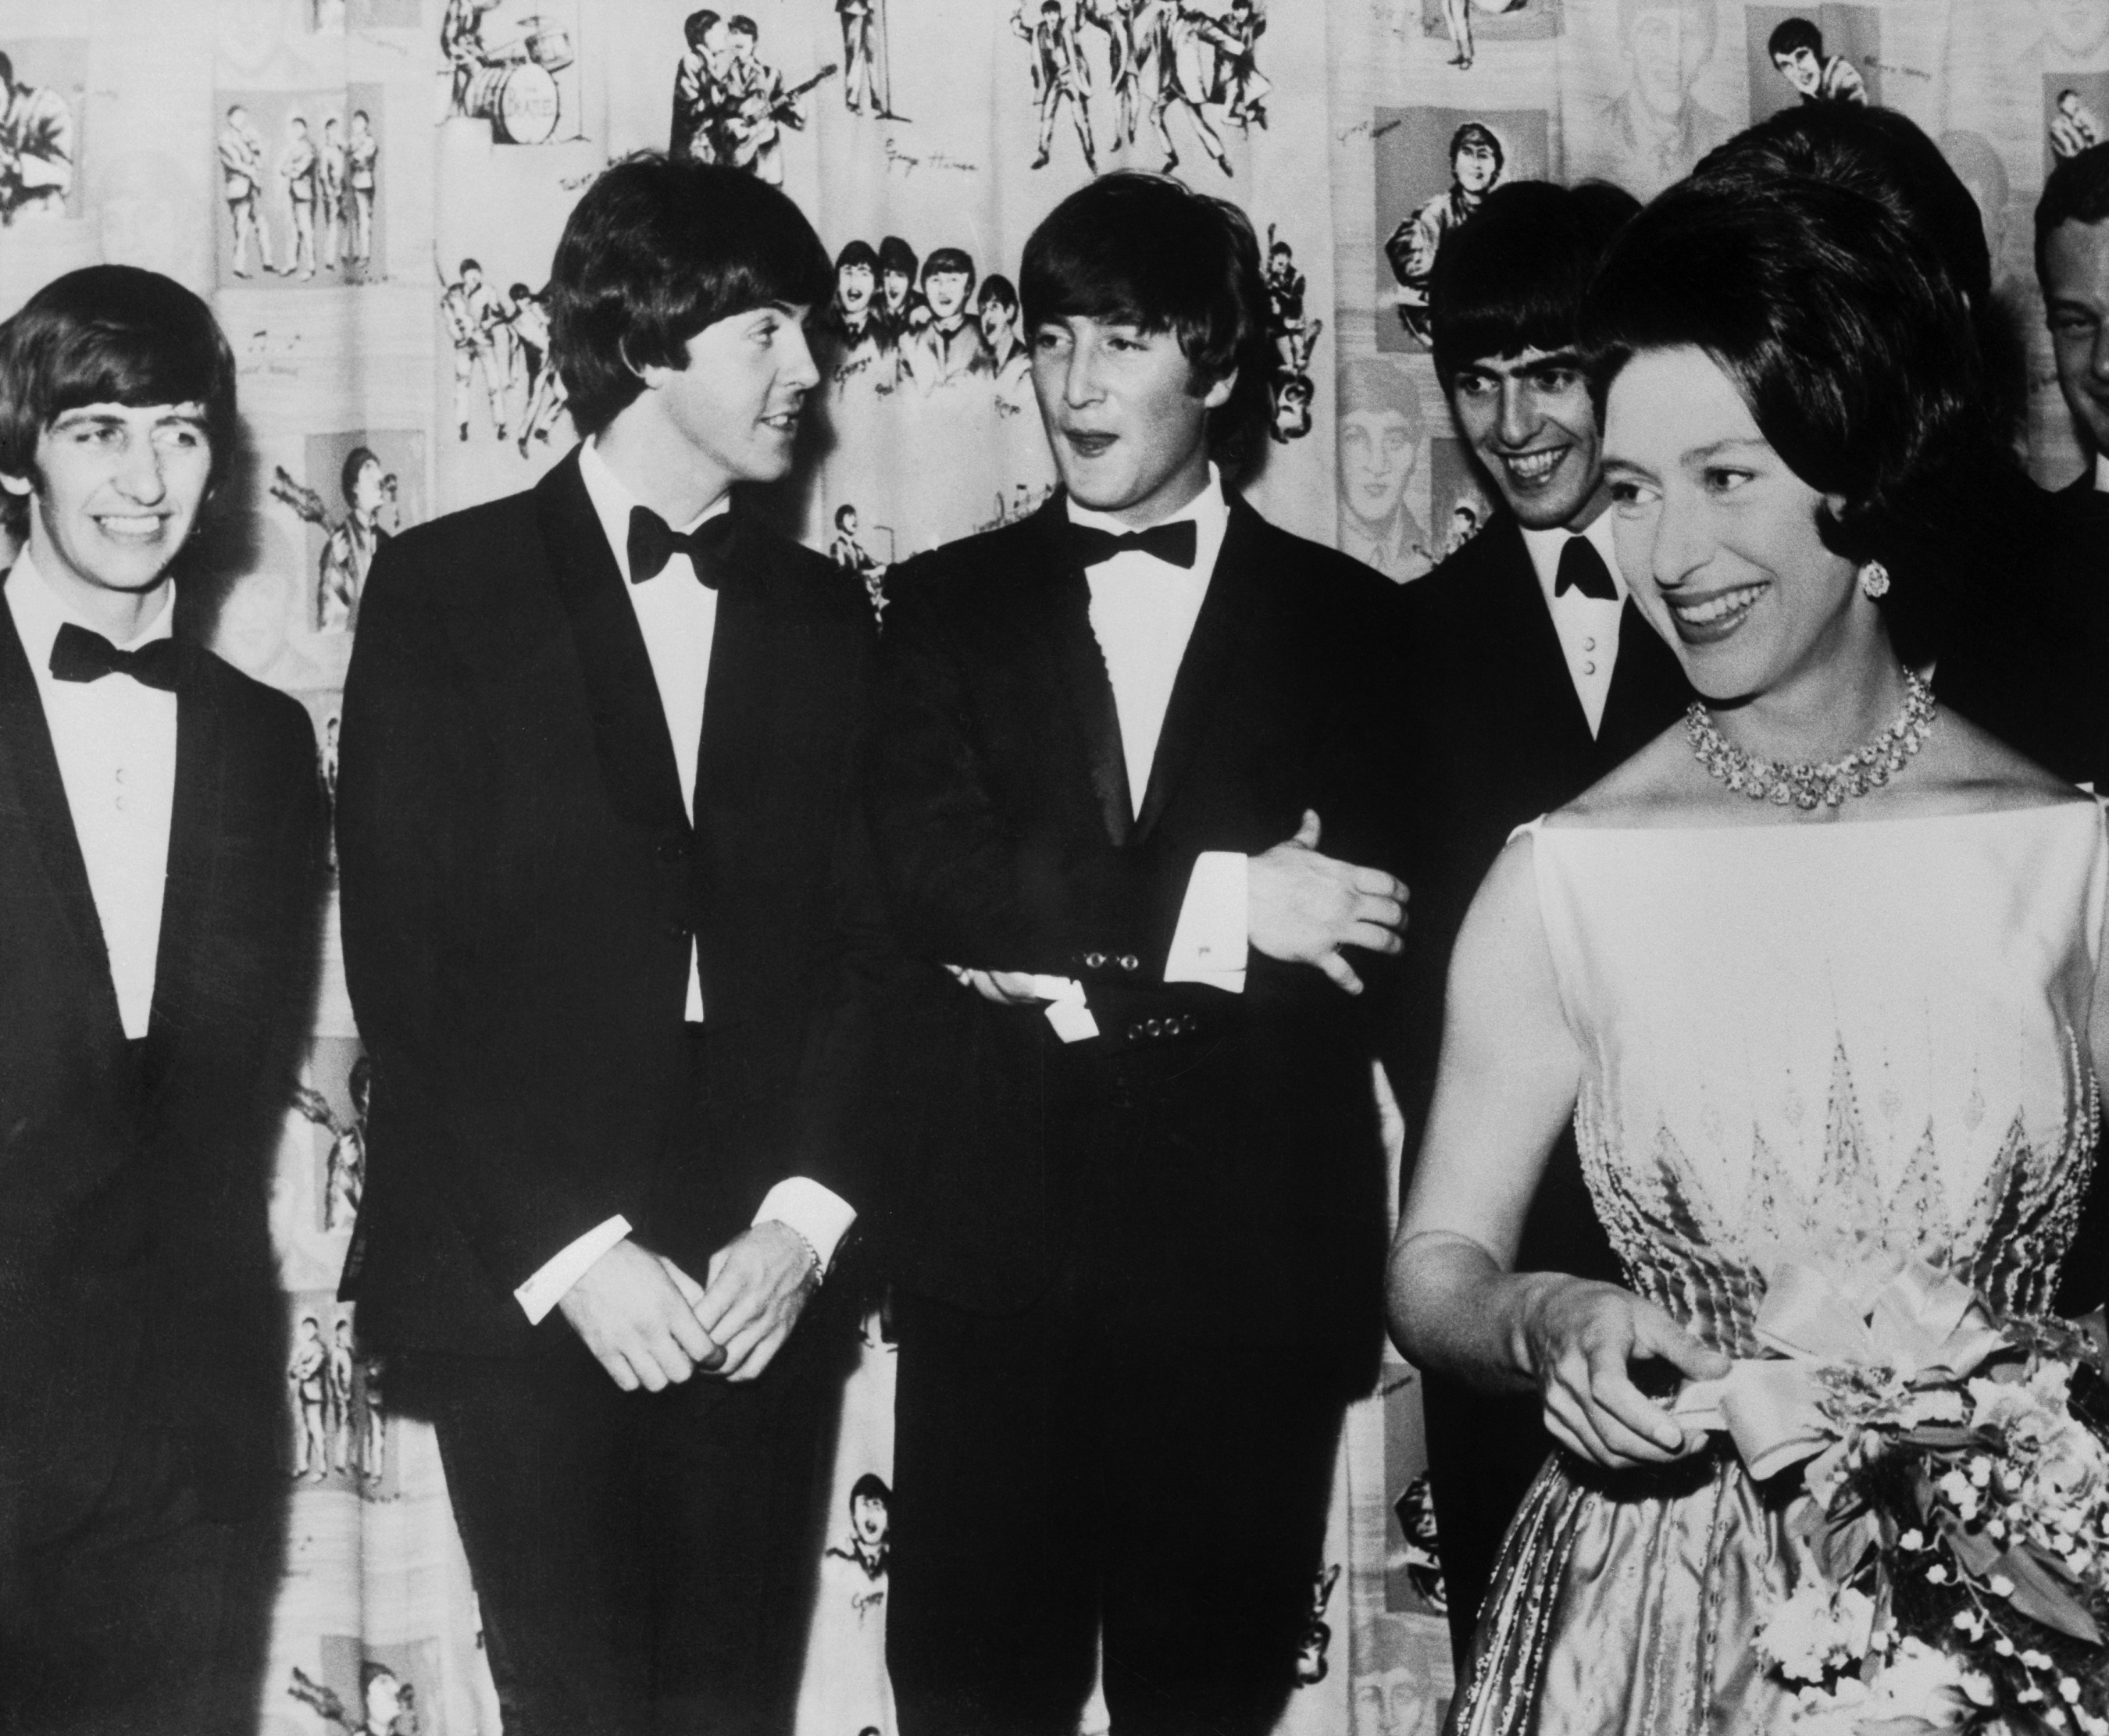 People 2700x2223 The Beatles John Lennon George Harrison Ringo Starr Paul McCartney band men women